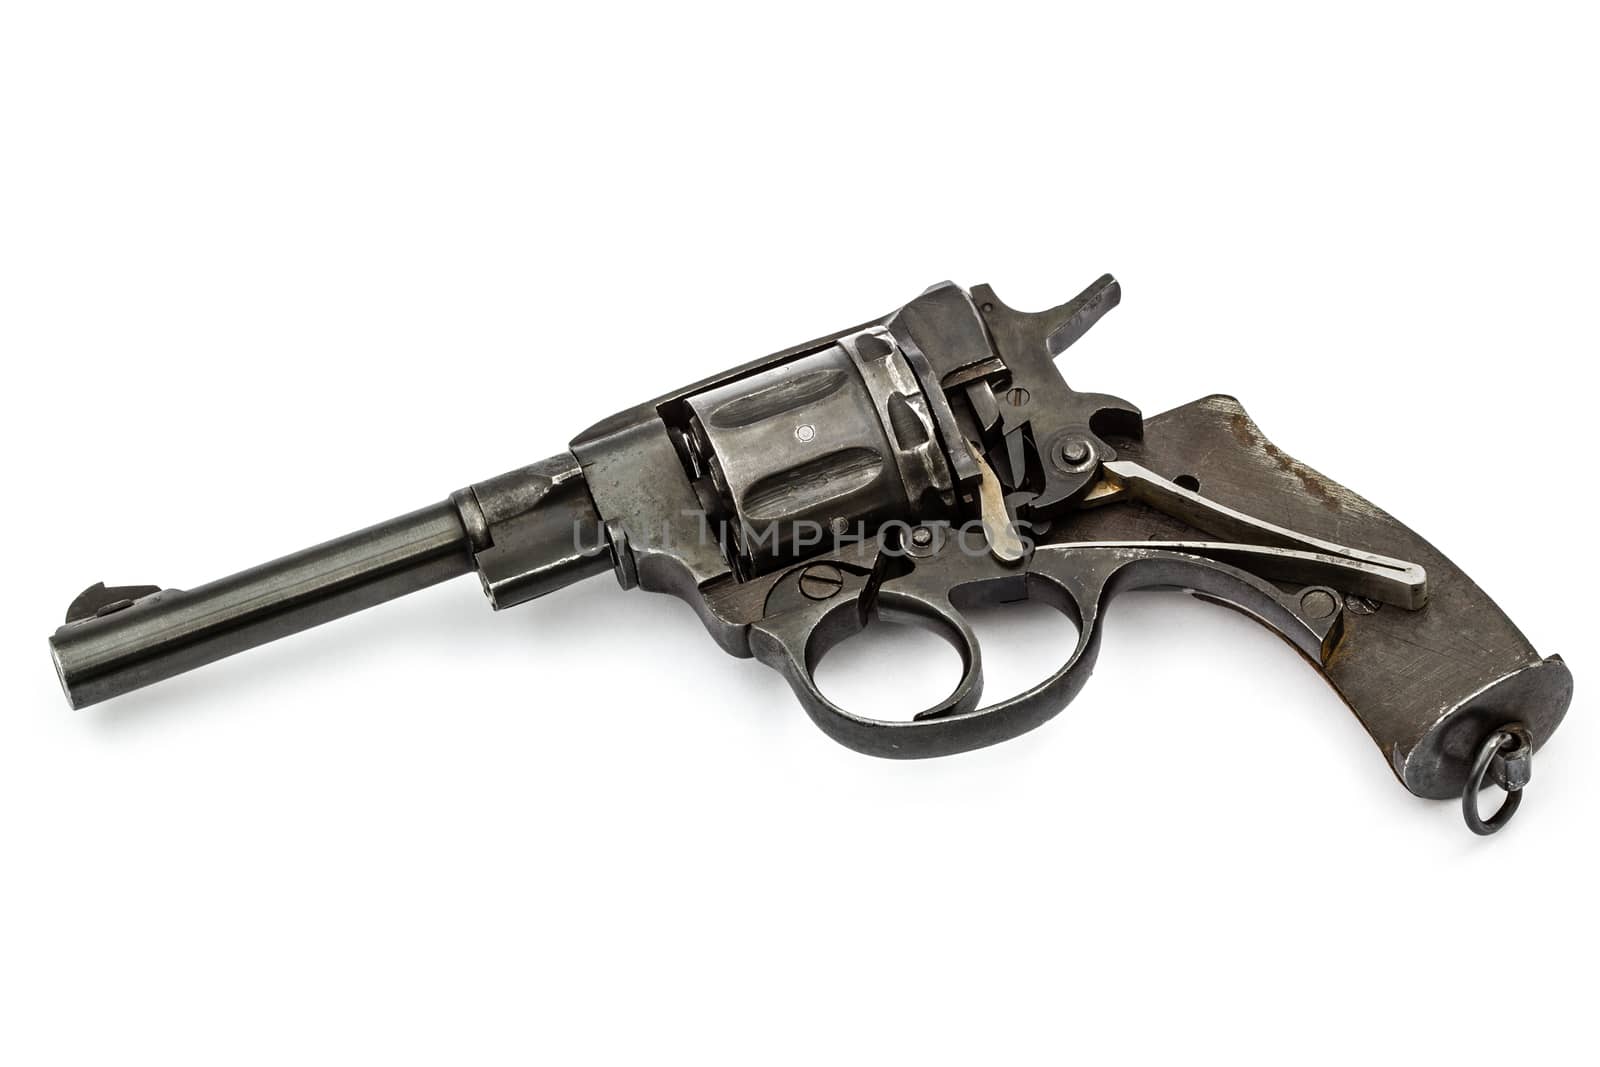 Disassembled revolver, pistol mechanism, isolated on white background